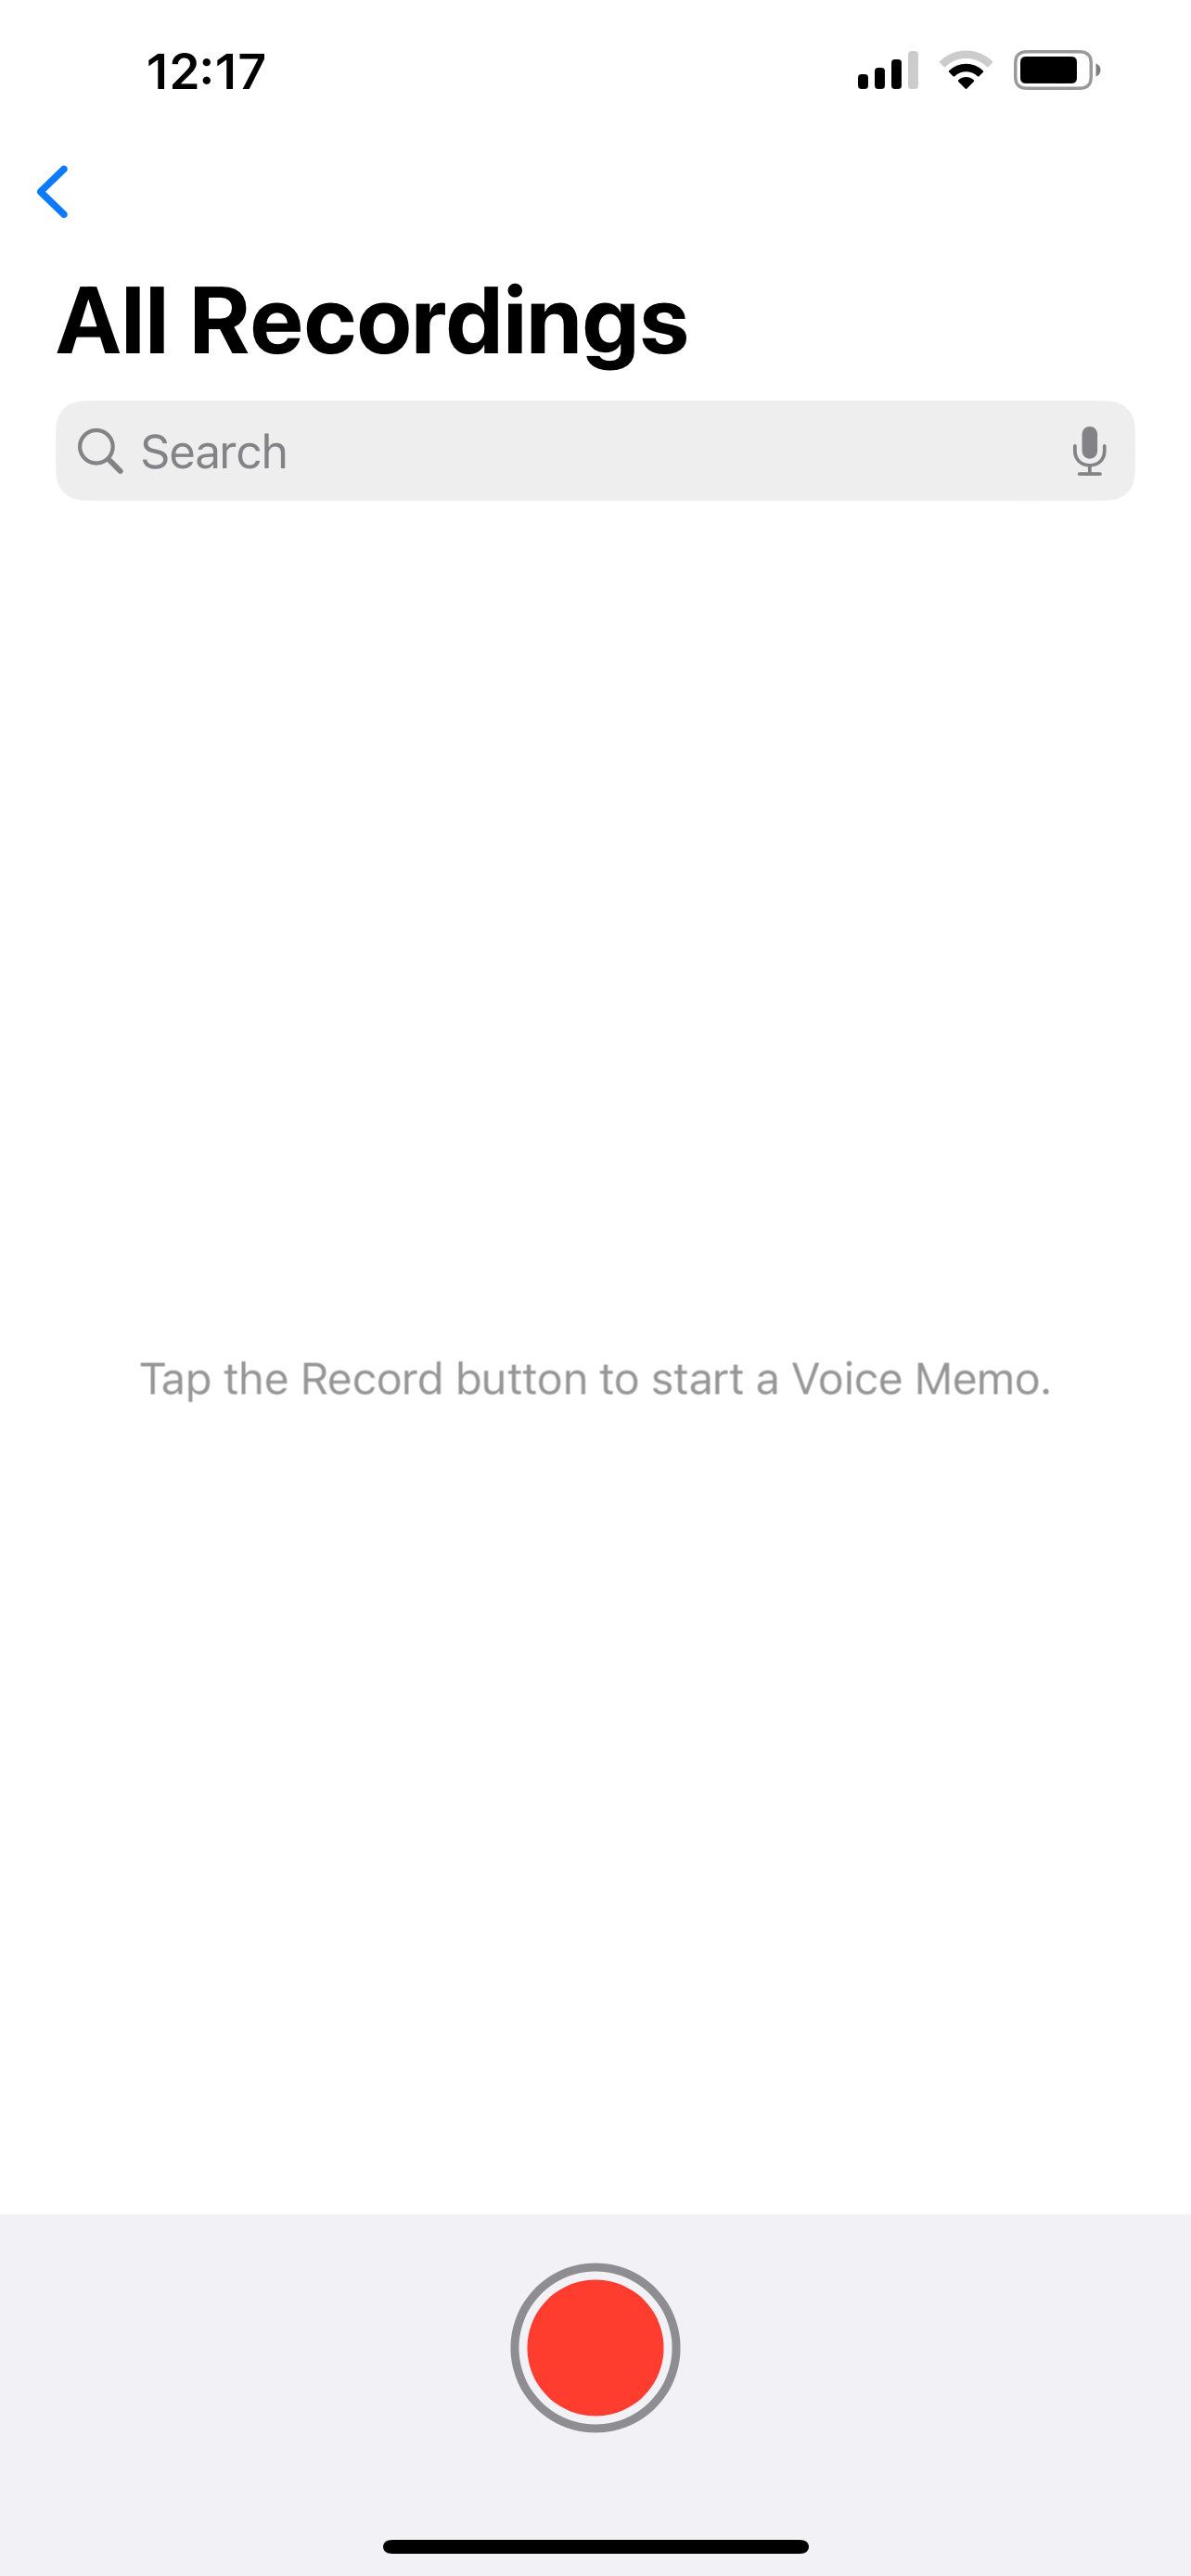 Main screen of the Apple Voice Memos app